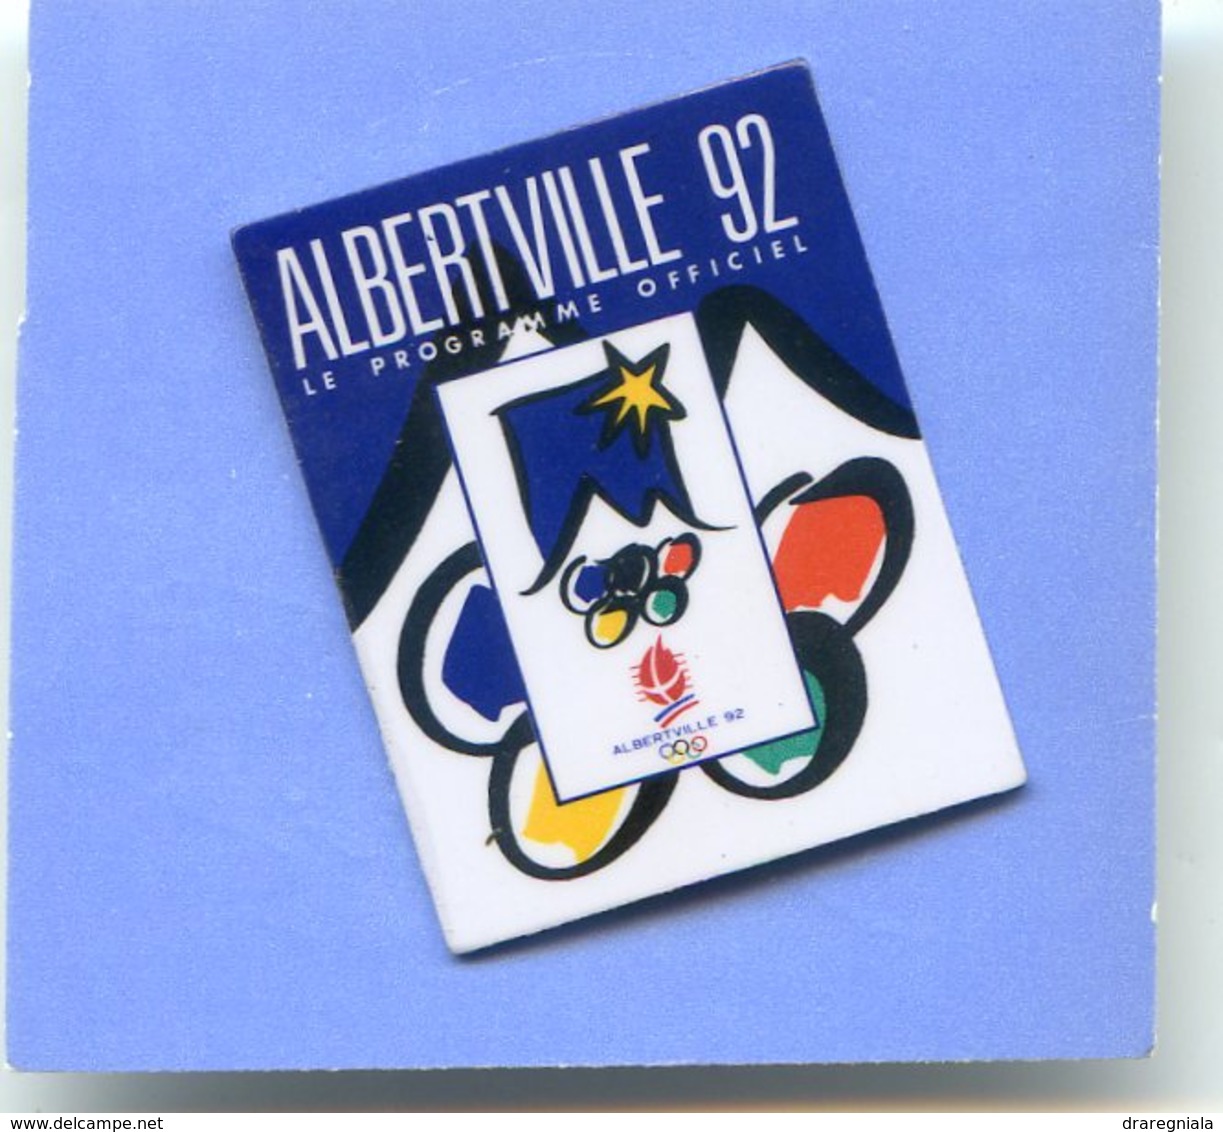 Jeux Olympiques - Albertville 92 - Le Programme Officiel - Olympic Games